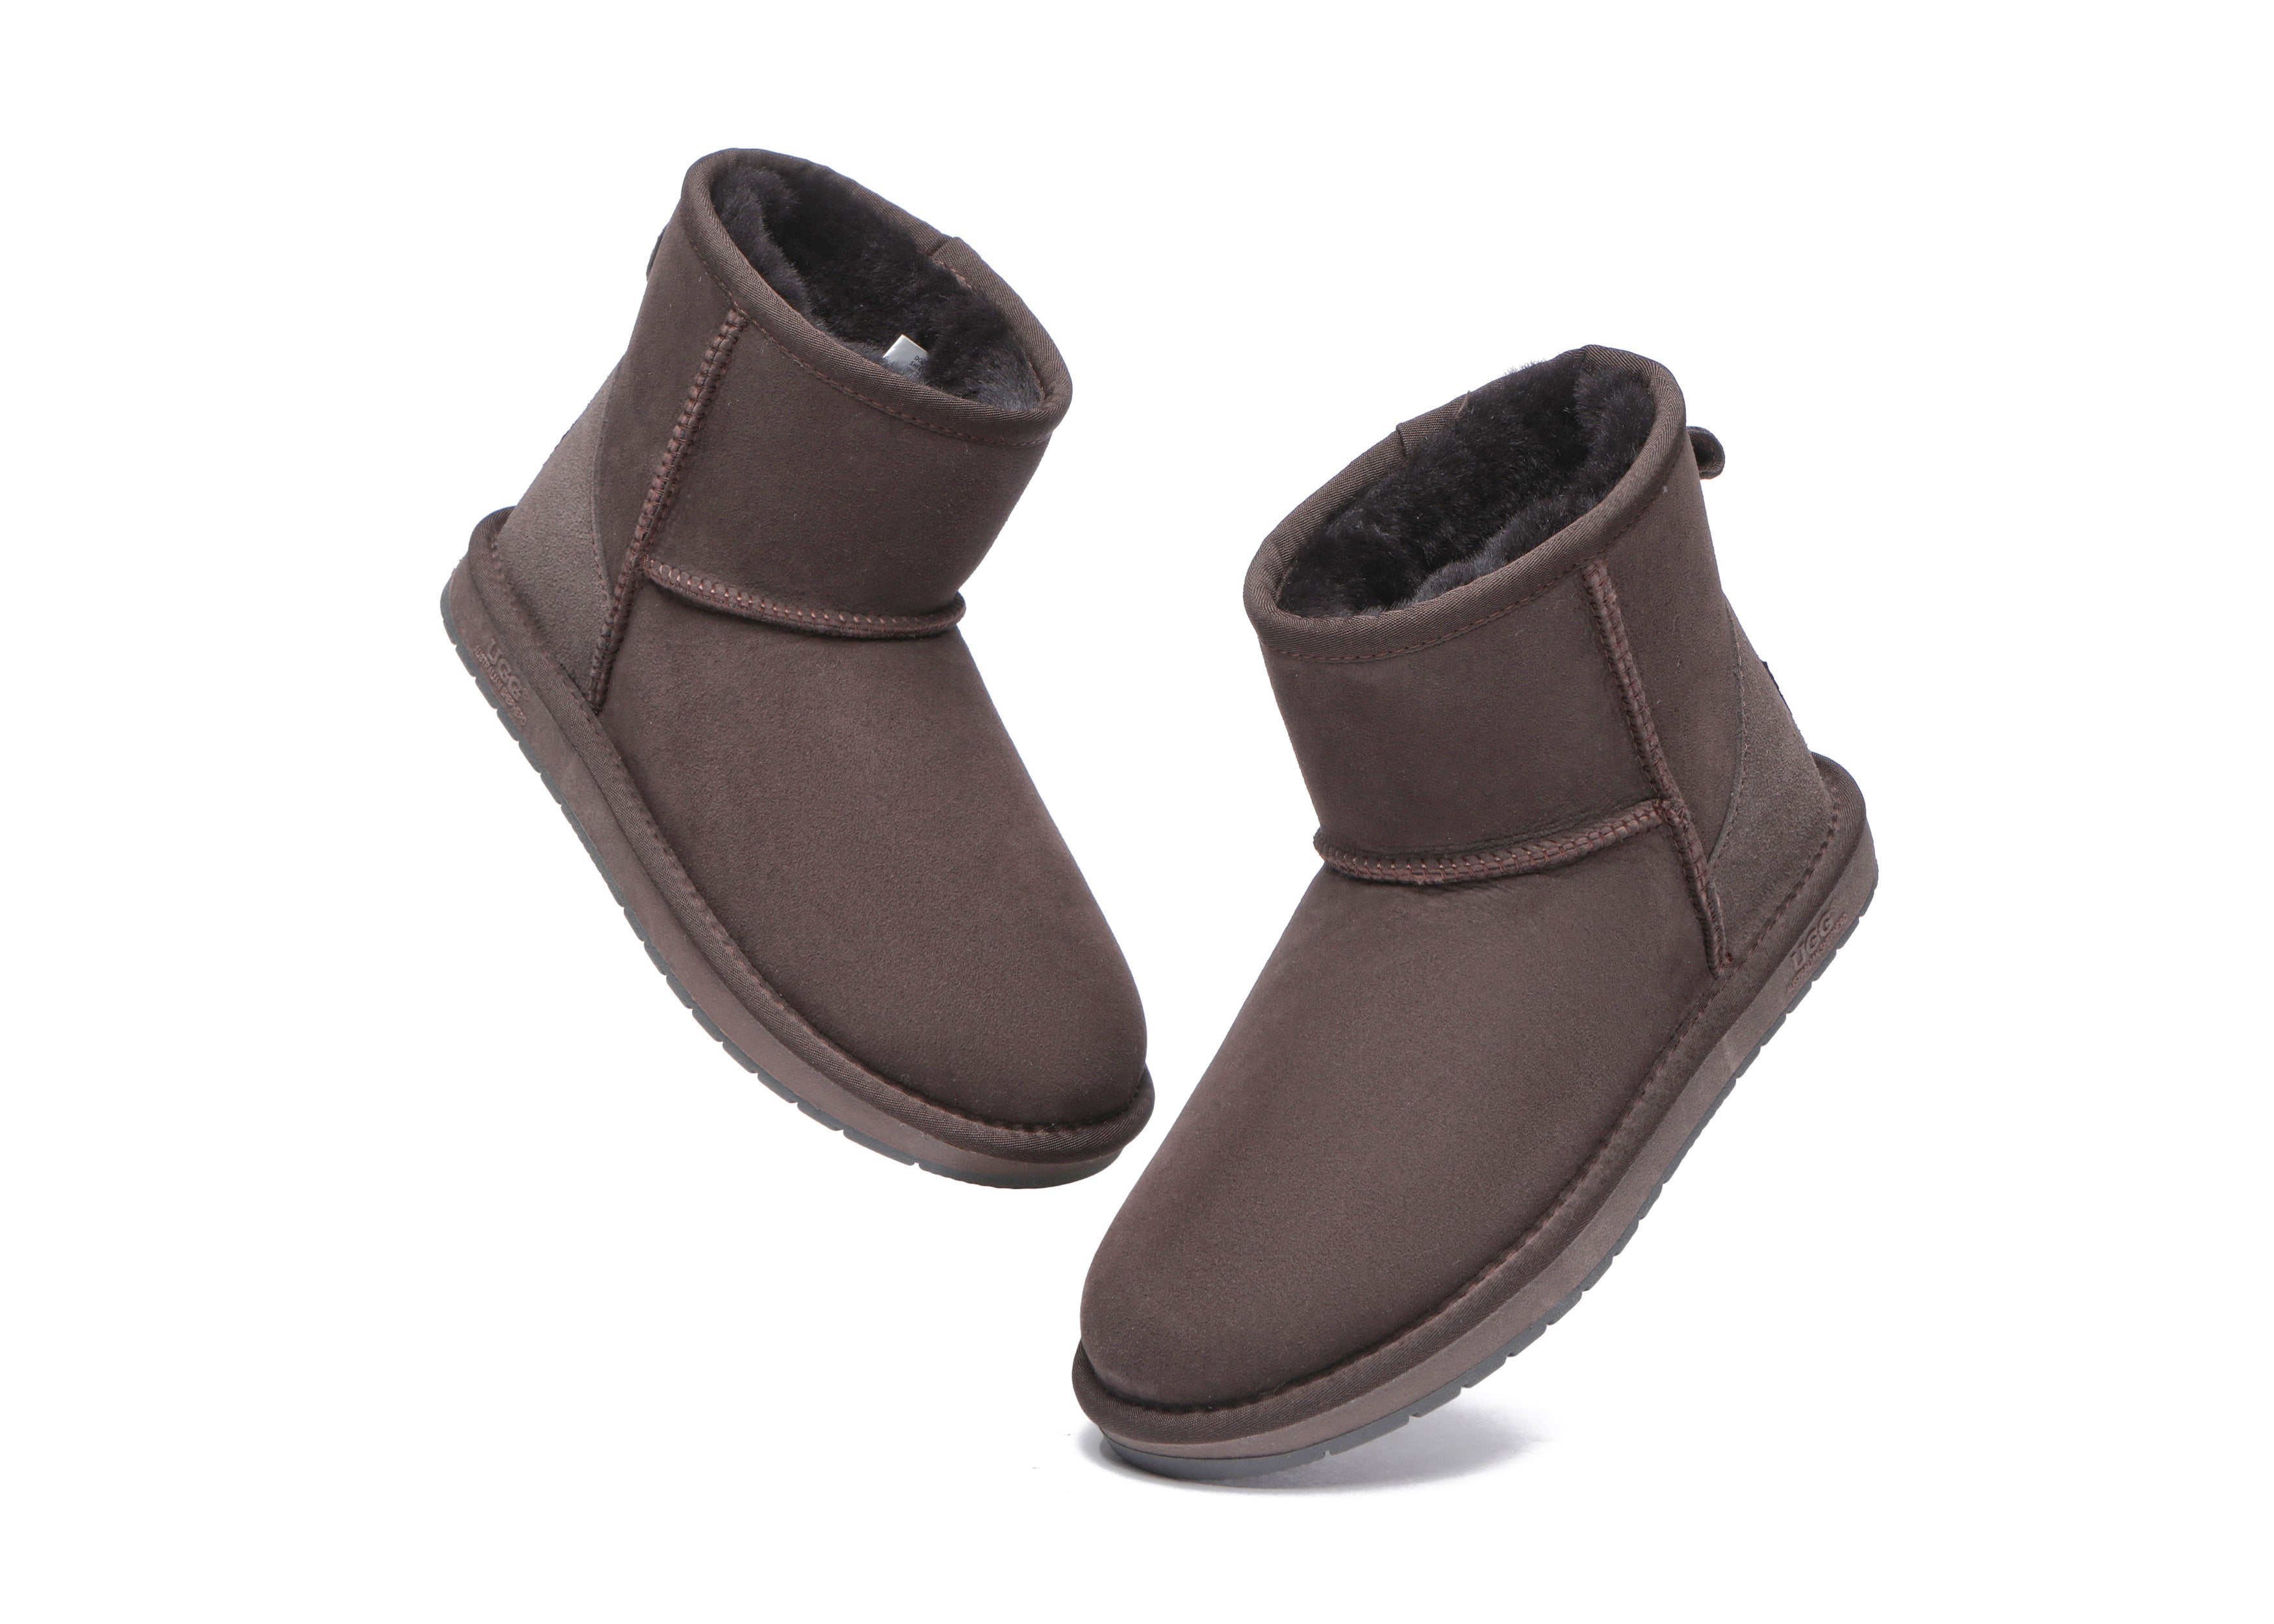 UGG Australian Shepherd® Unisex Double Faced Sheepskin Wool Mini Classic Boots - UGG Boots - Chocolate - AU Ladies 10 / AU Men 8 / EU 41 - Uggoutlet